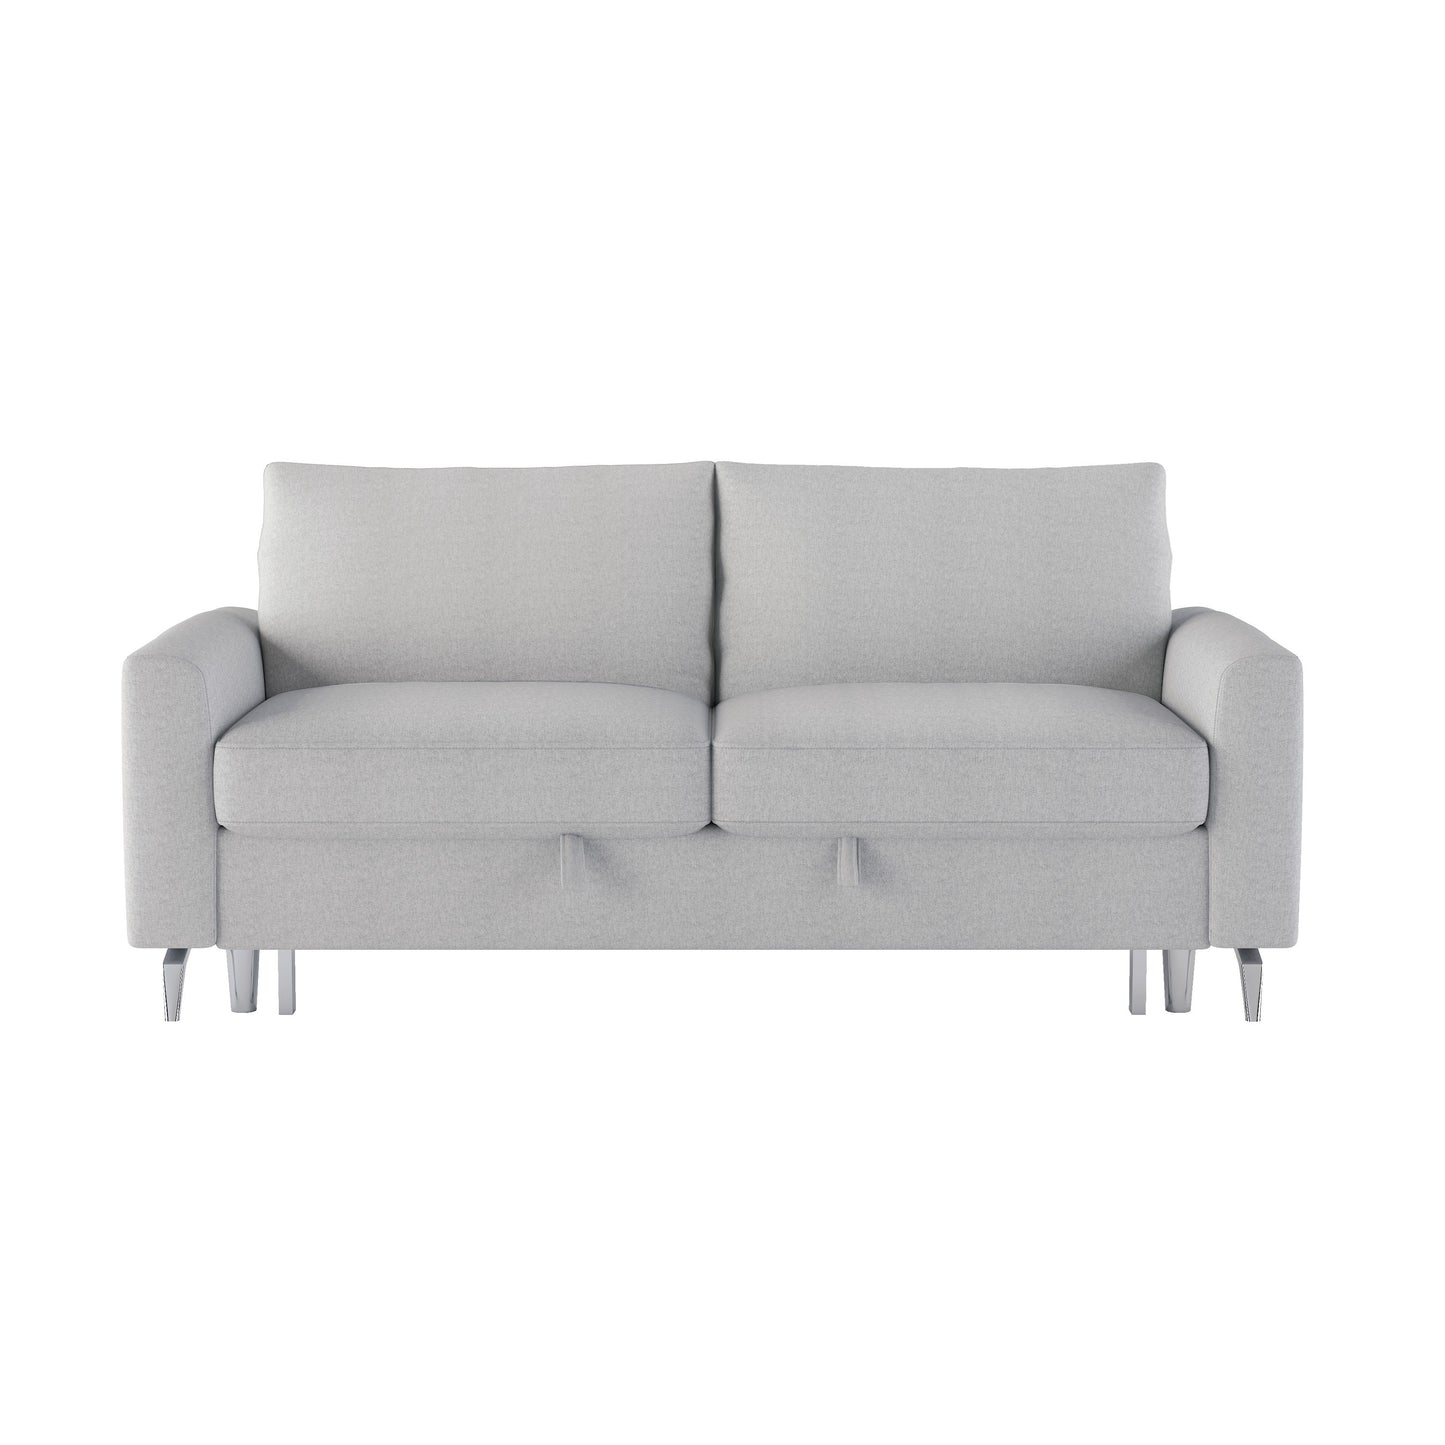 Price Convertible Sleeper Sofa Metal Leg